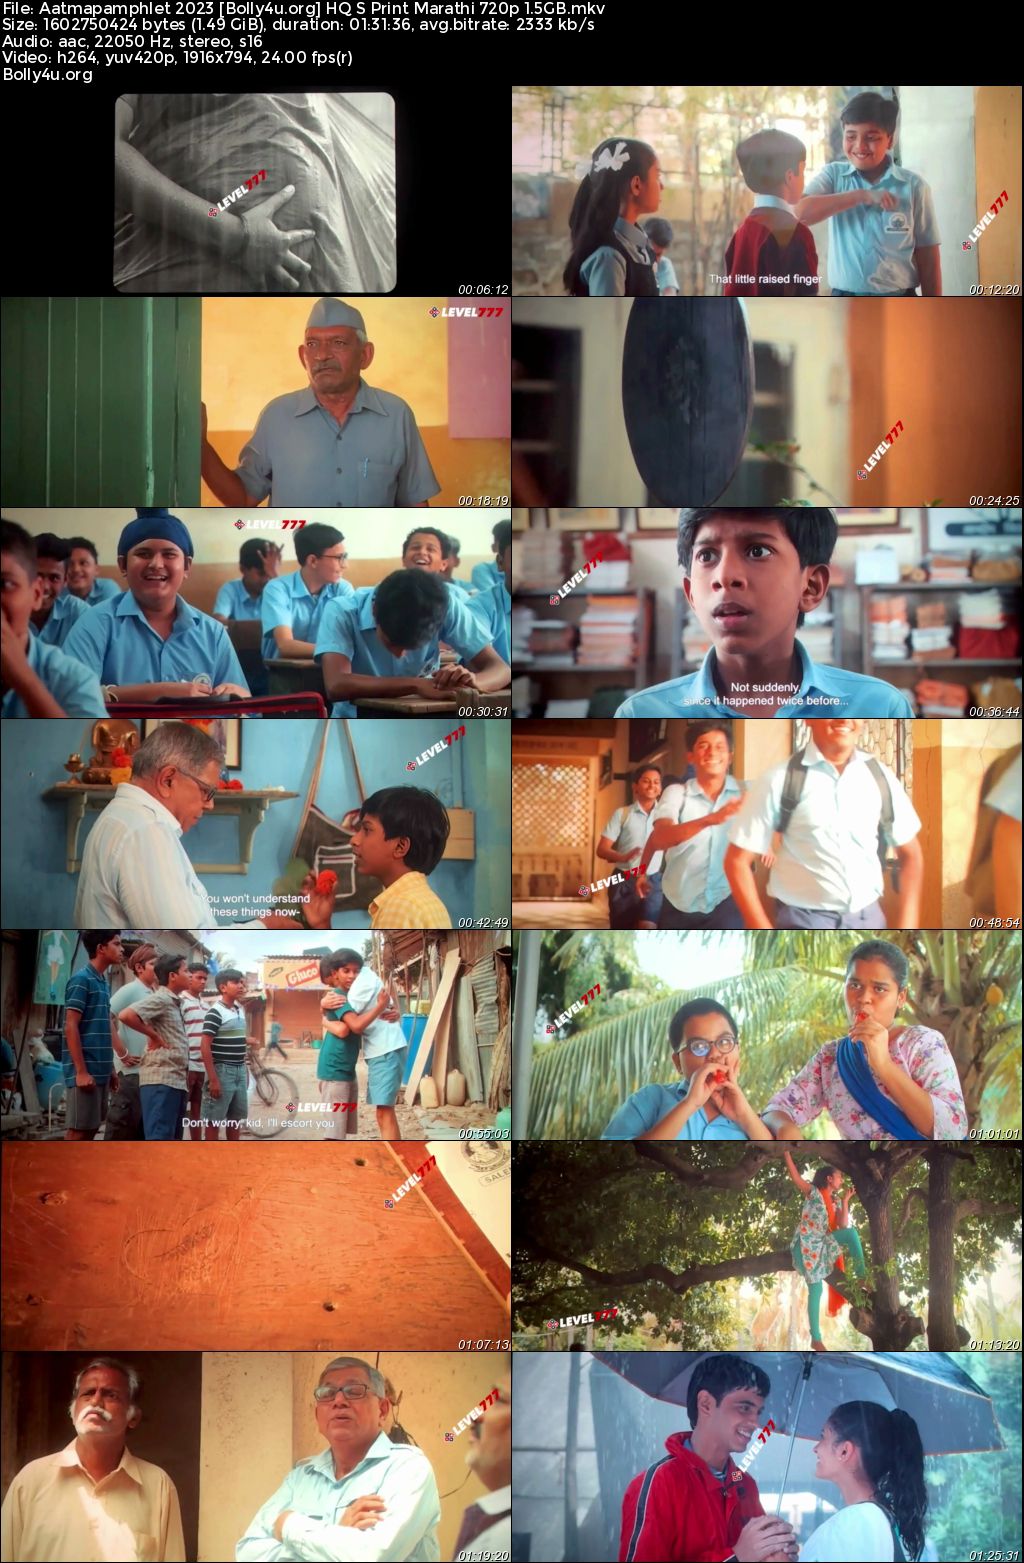 Aatmapamphlet 2023 HQ S Print Marathi Full Movie Download 720p 480p